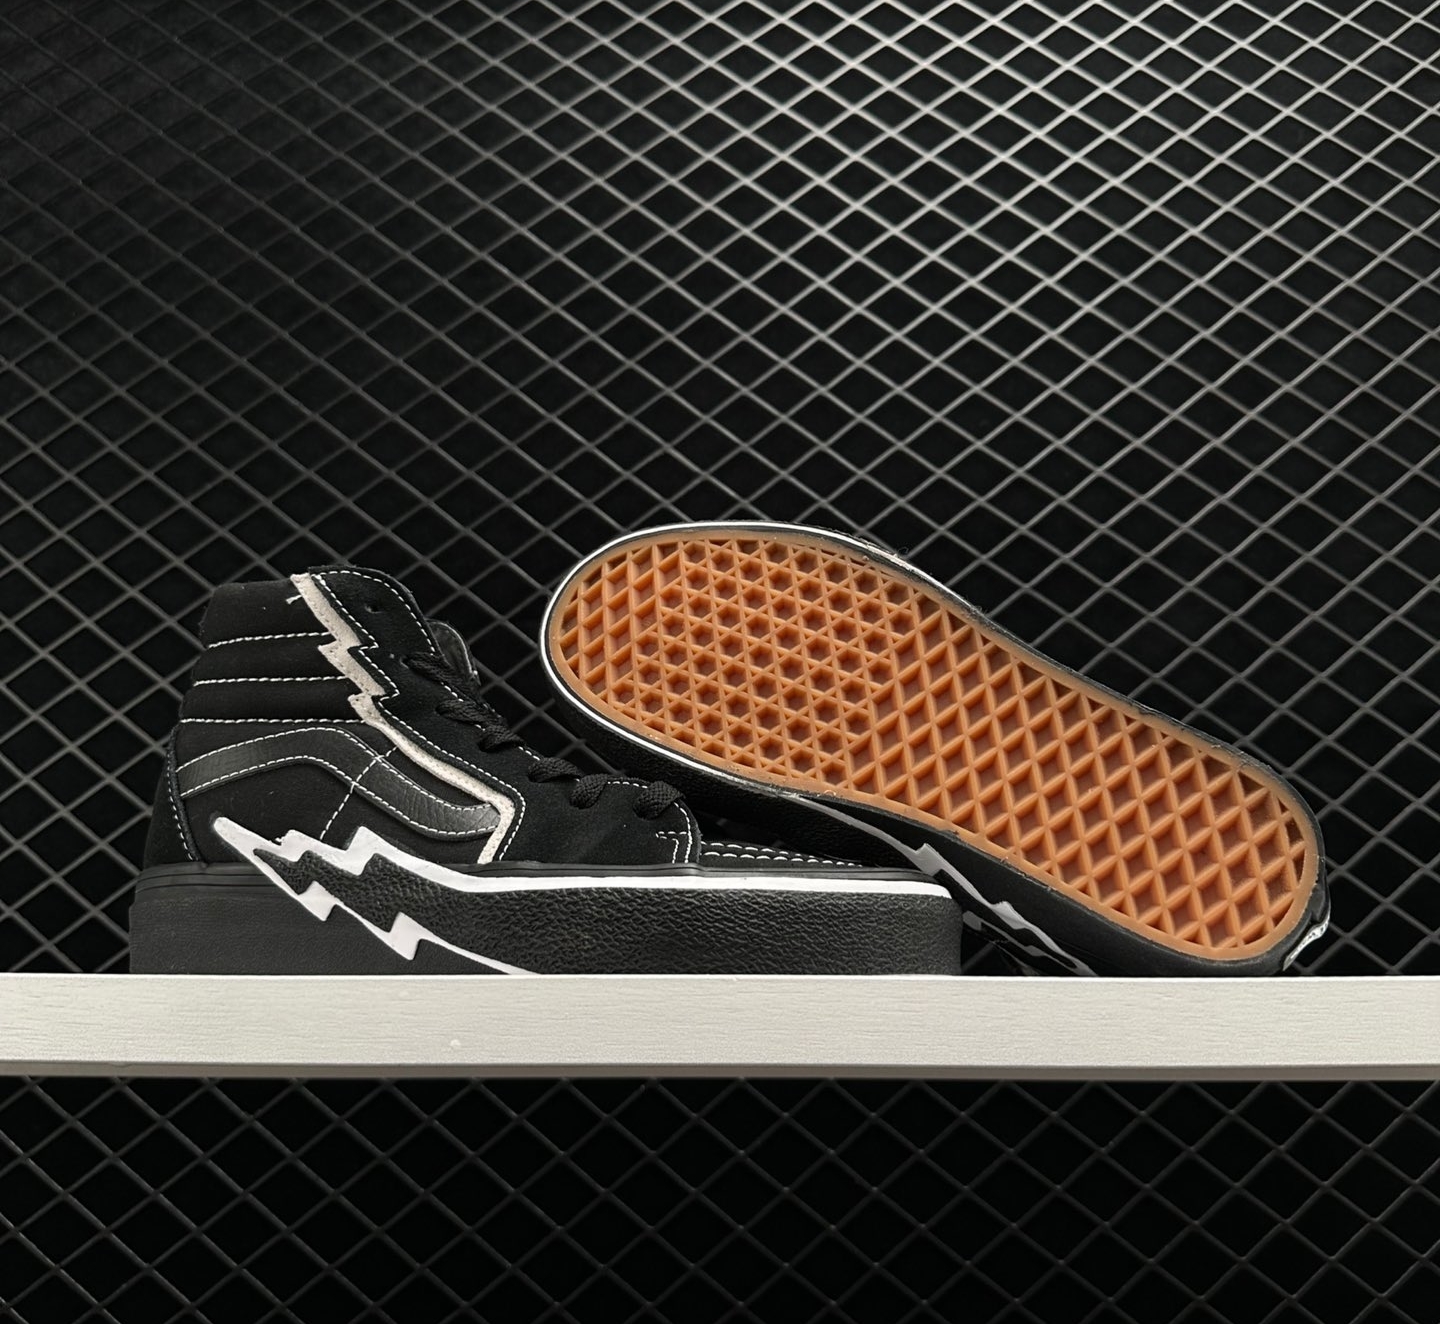 Vans SK8-HI 'Bolt - Black' VN0A5JIVBKA: Sturdy and Stylish Sneakers